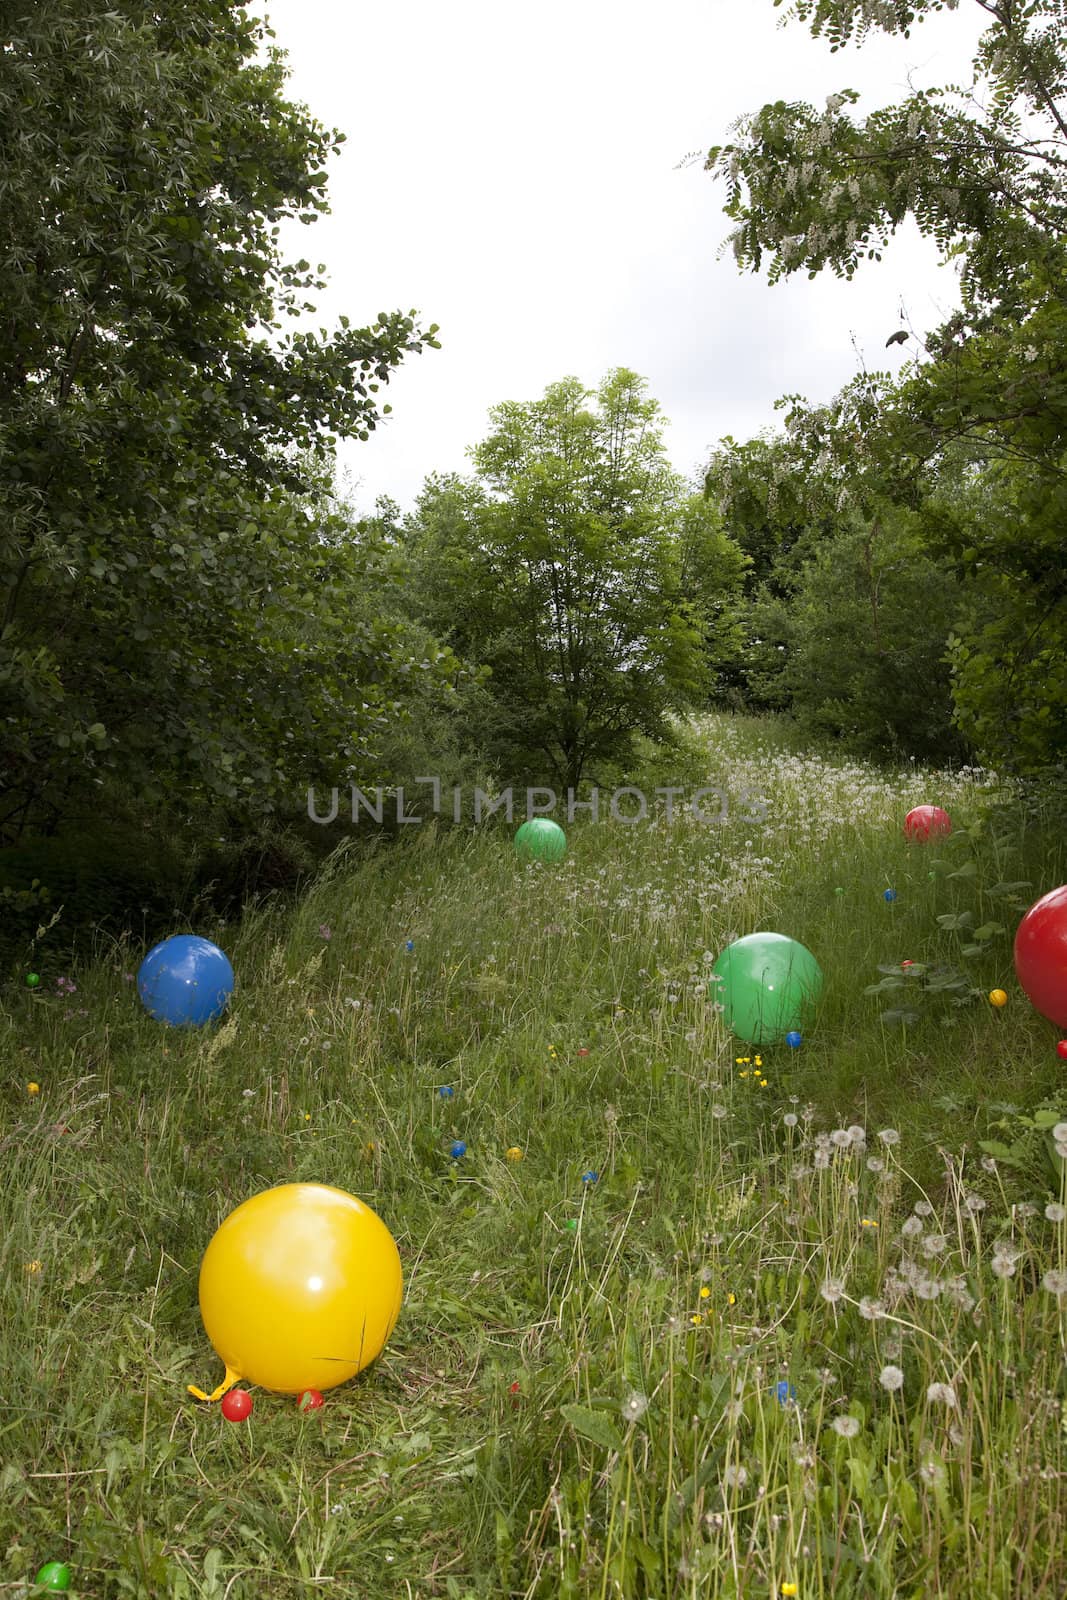 Coloured balloons on grass